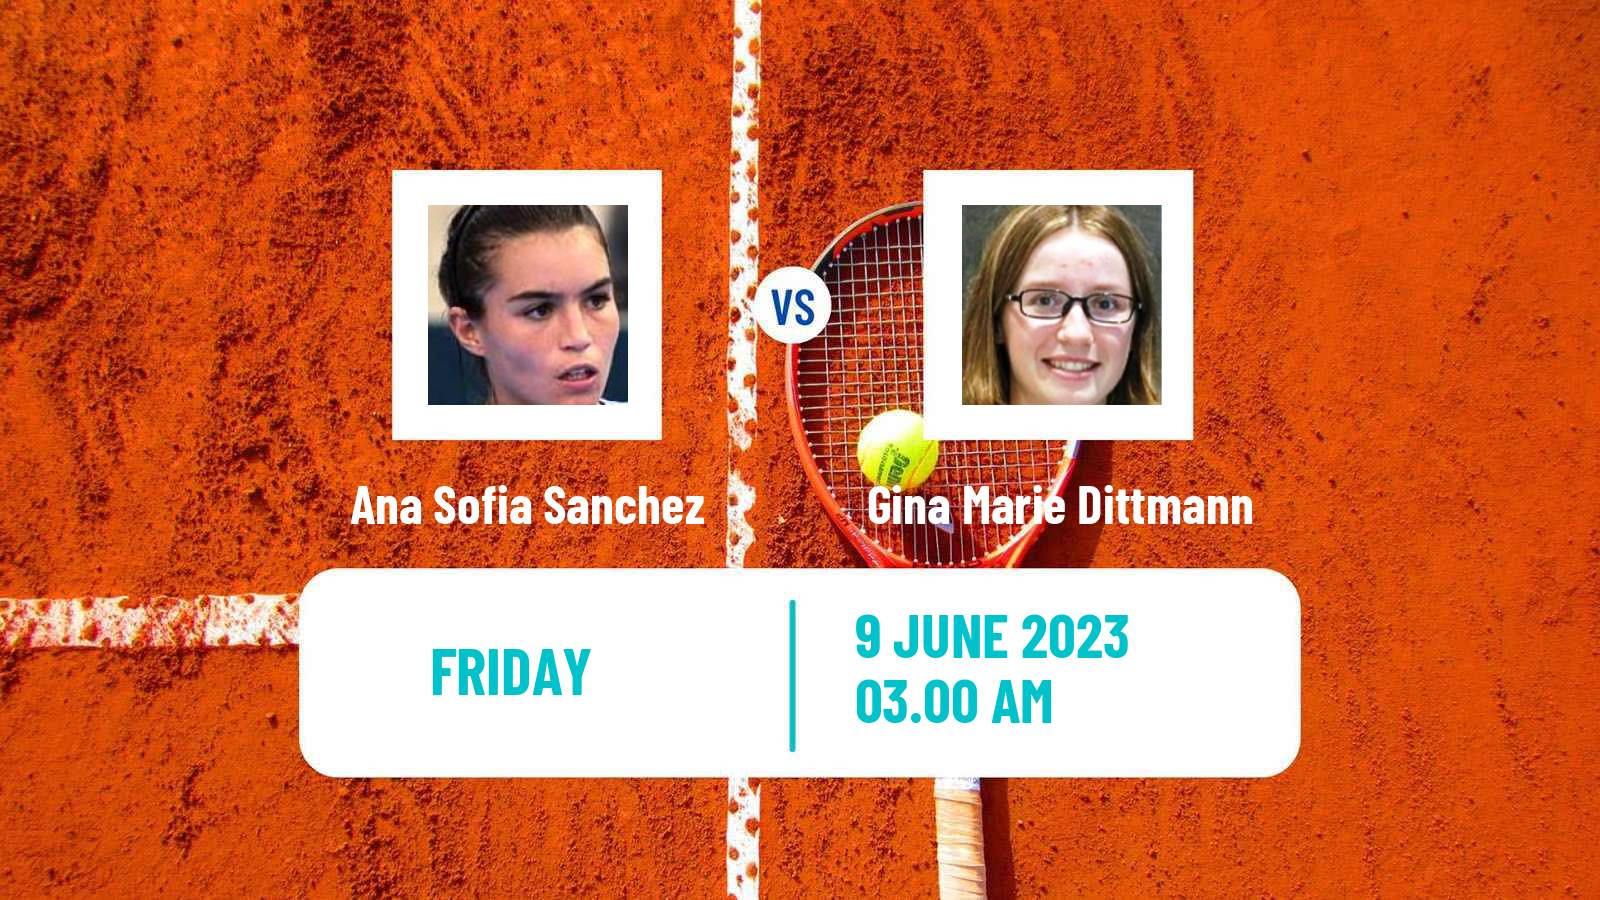 Tennis ITF W25 Madrid Women Ana Sofia Sanchez - Gina Marie Dittmann